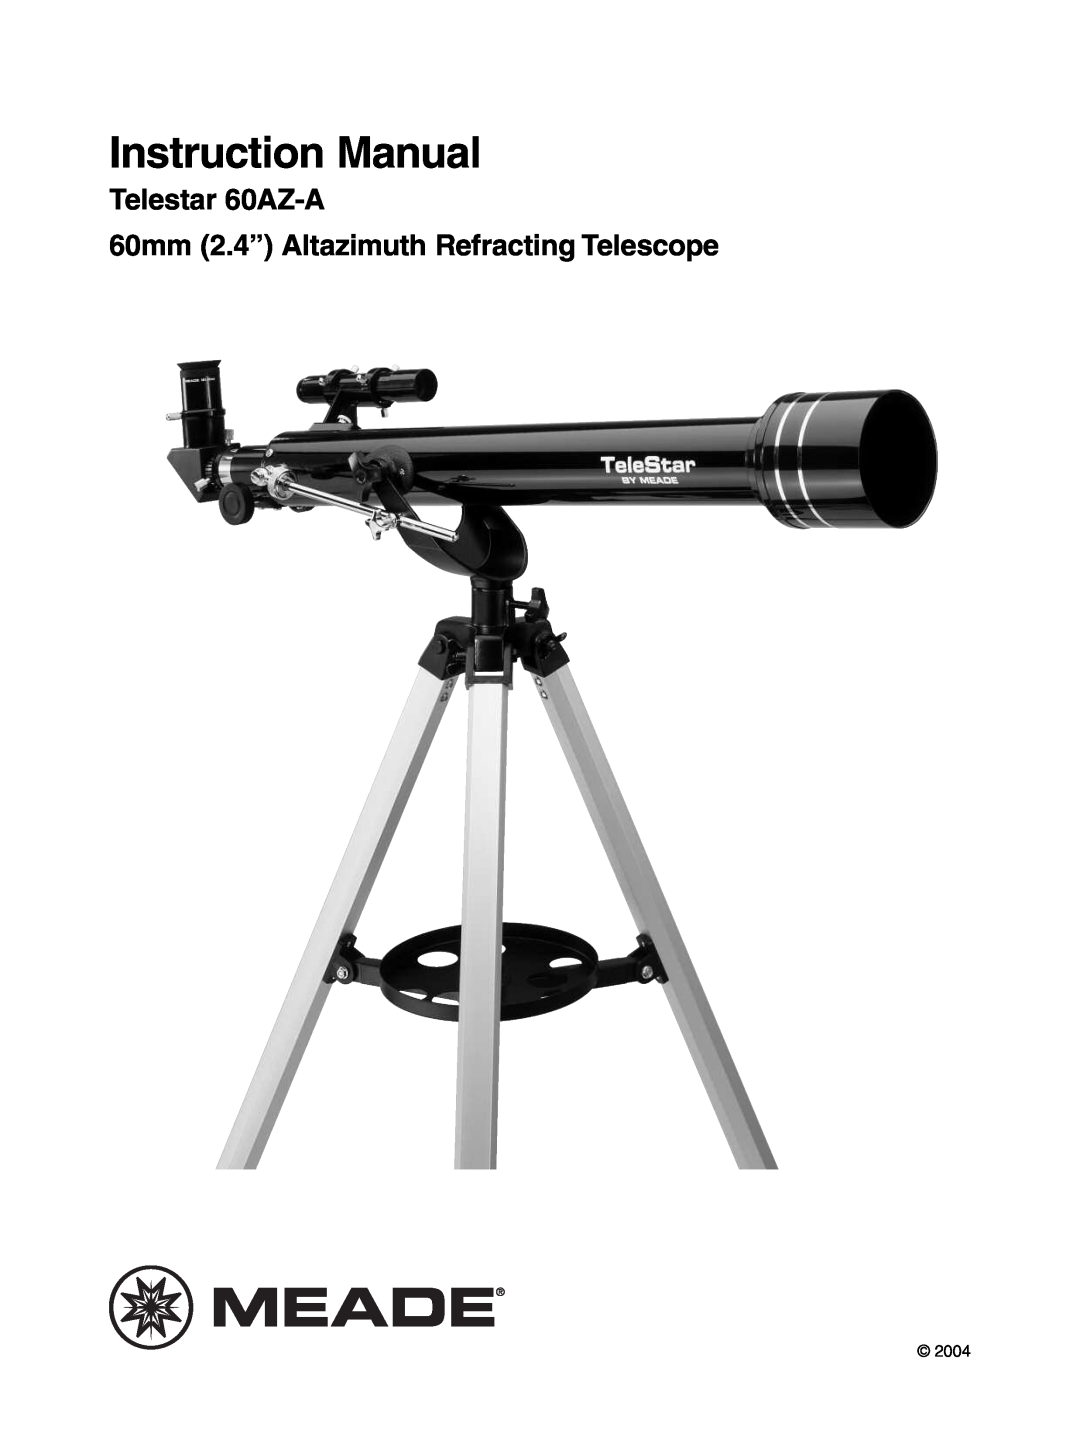 Meade instruction manual Instruction Manual, Telestar 60AZ-A 60mm 2.4” Altazimuth Refracting Telescope, 2004 